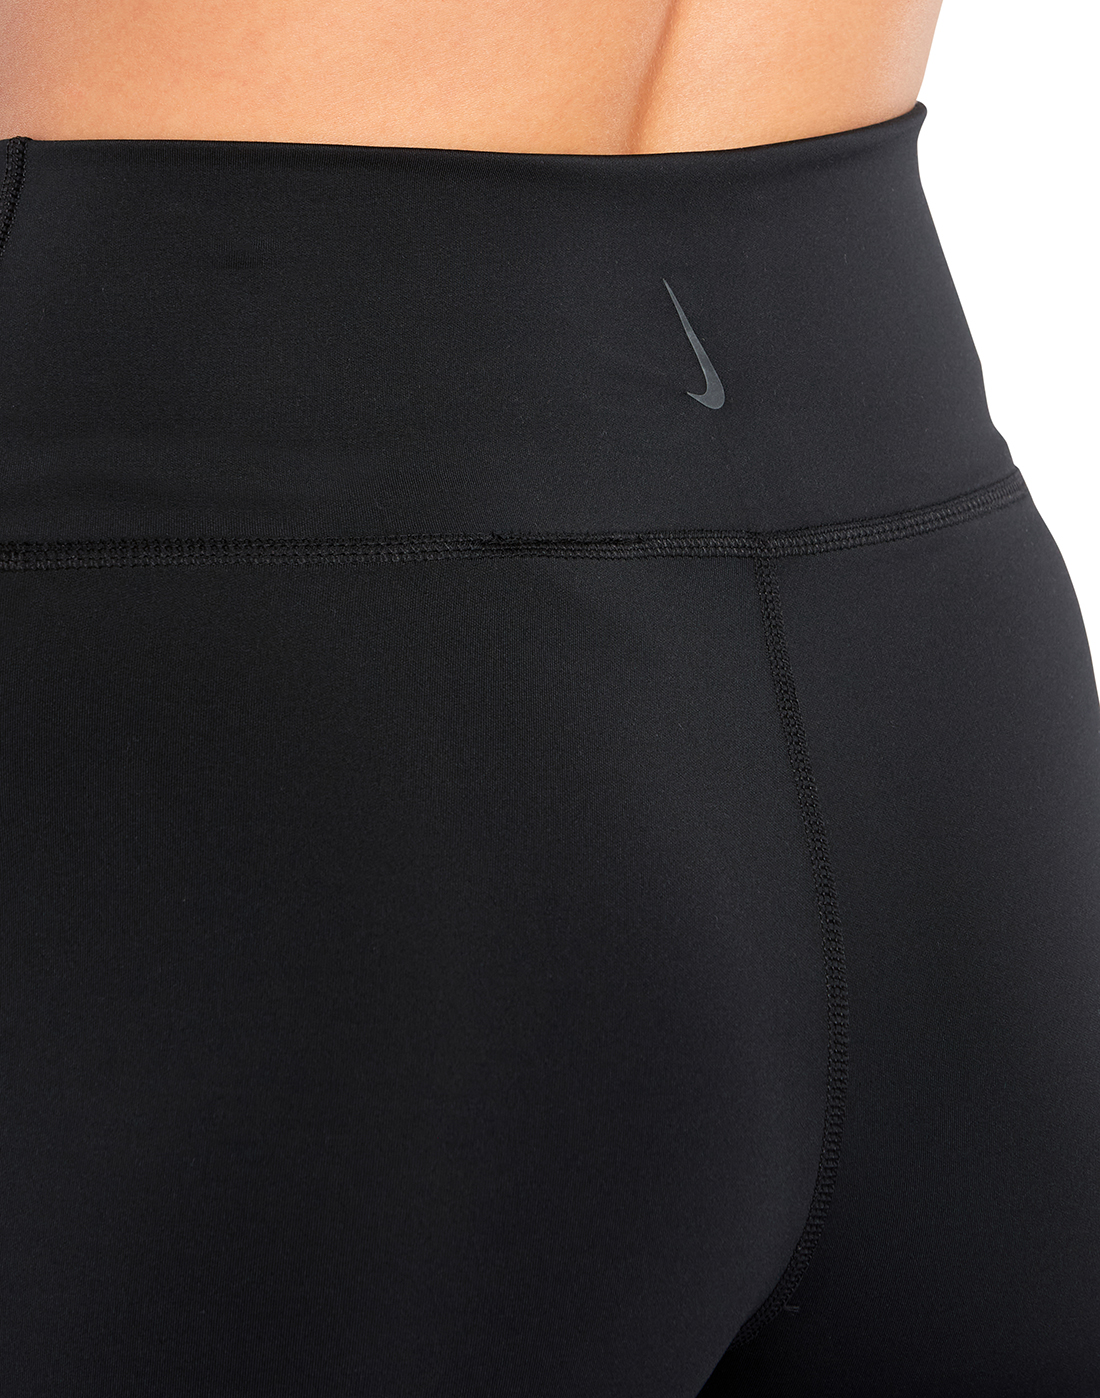 Nike Womens Yoga Wrap 7/8 Leggings - Black